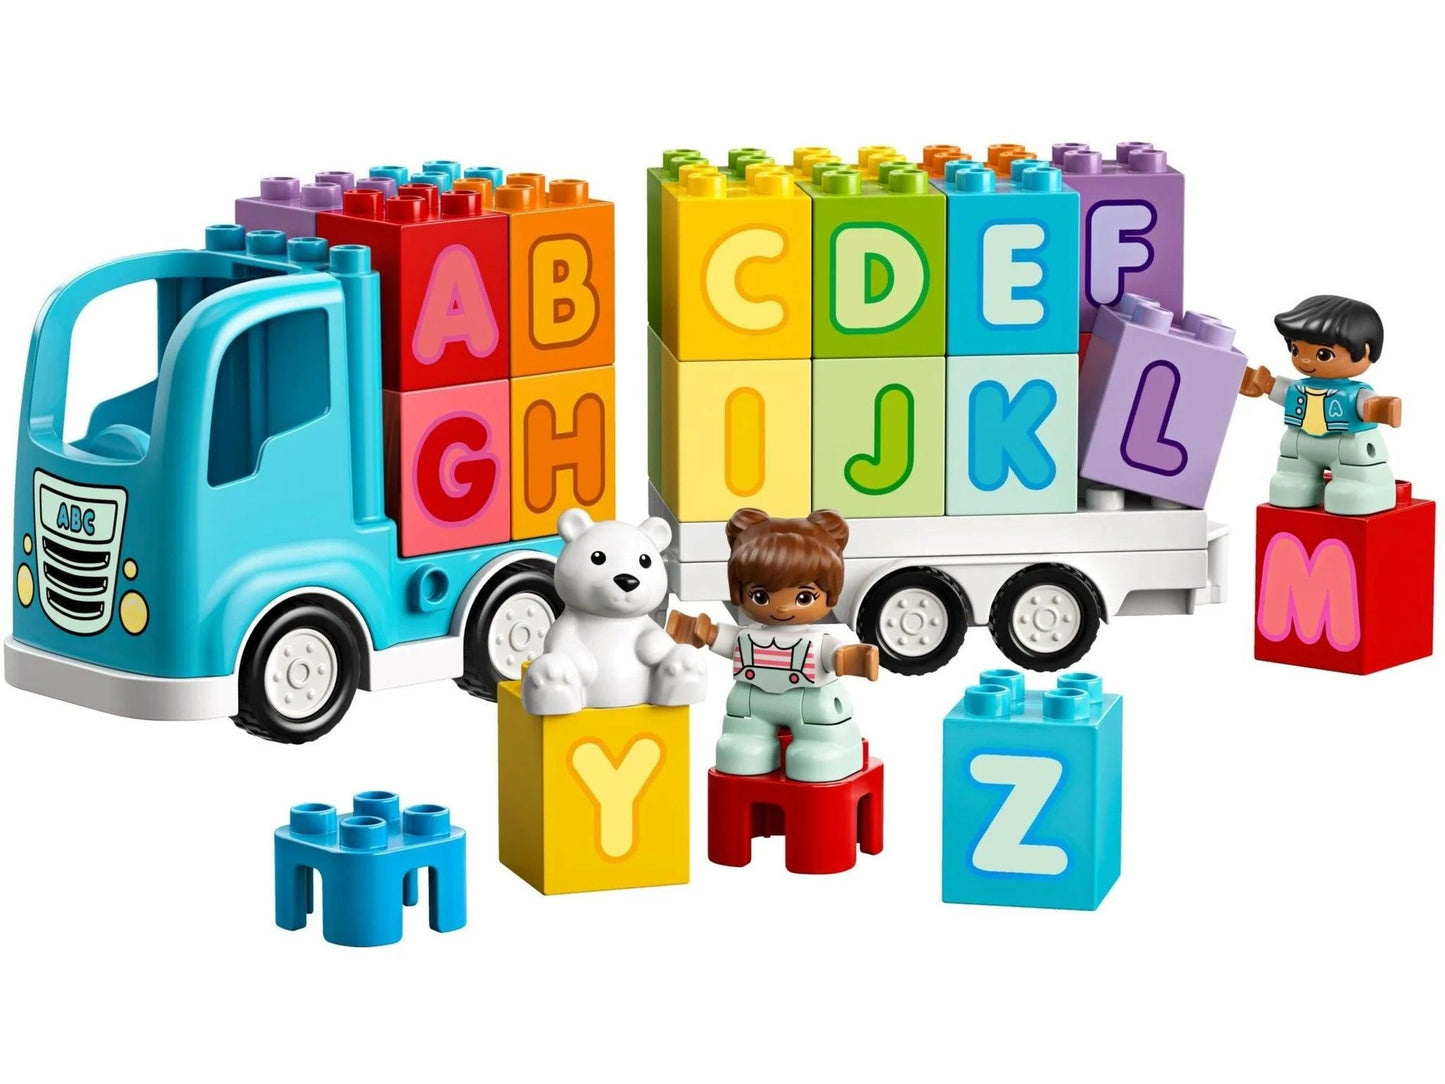 LEGO DUPLO 10915 Alfabet vrachtwagen | 2TTOYS ✓ Official shop<br>